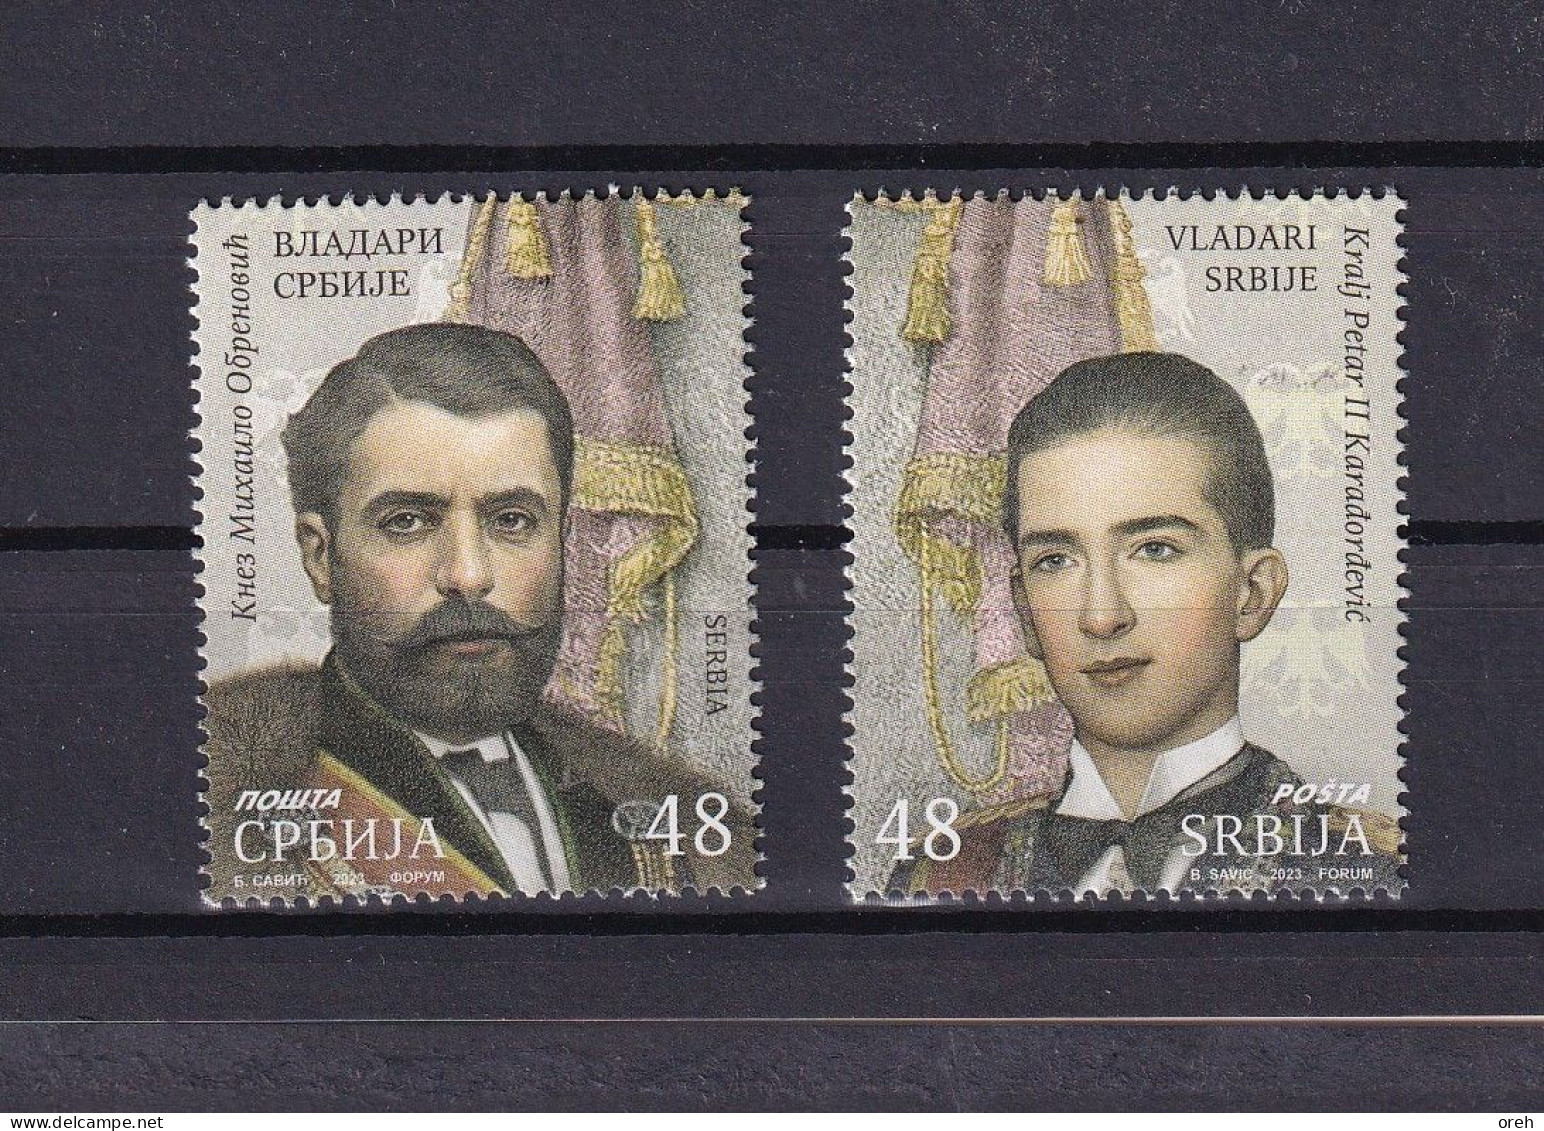 SERBIA 2023,Rulers Of Serbia Mihailo Obrenovic And Petar II Karadordevic,MNH - Serbie